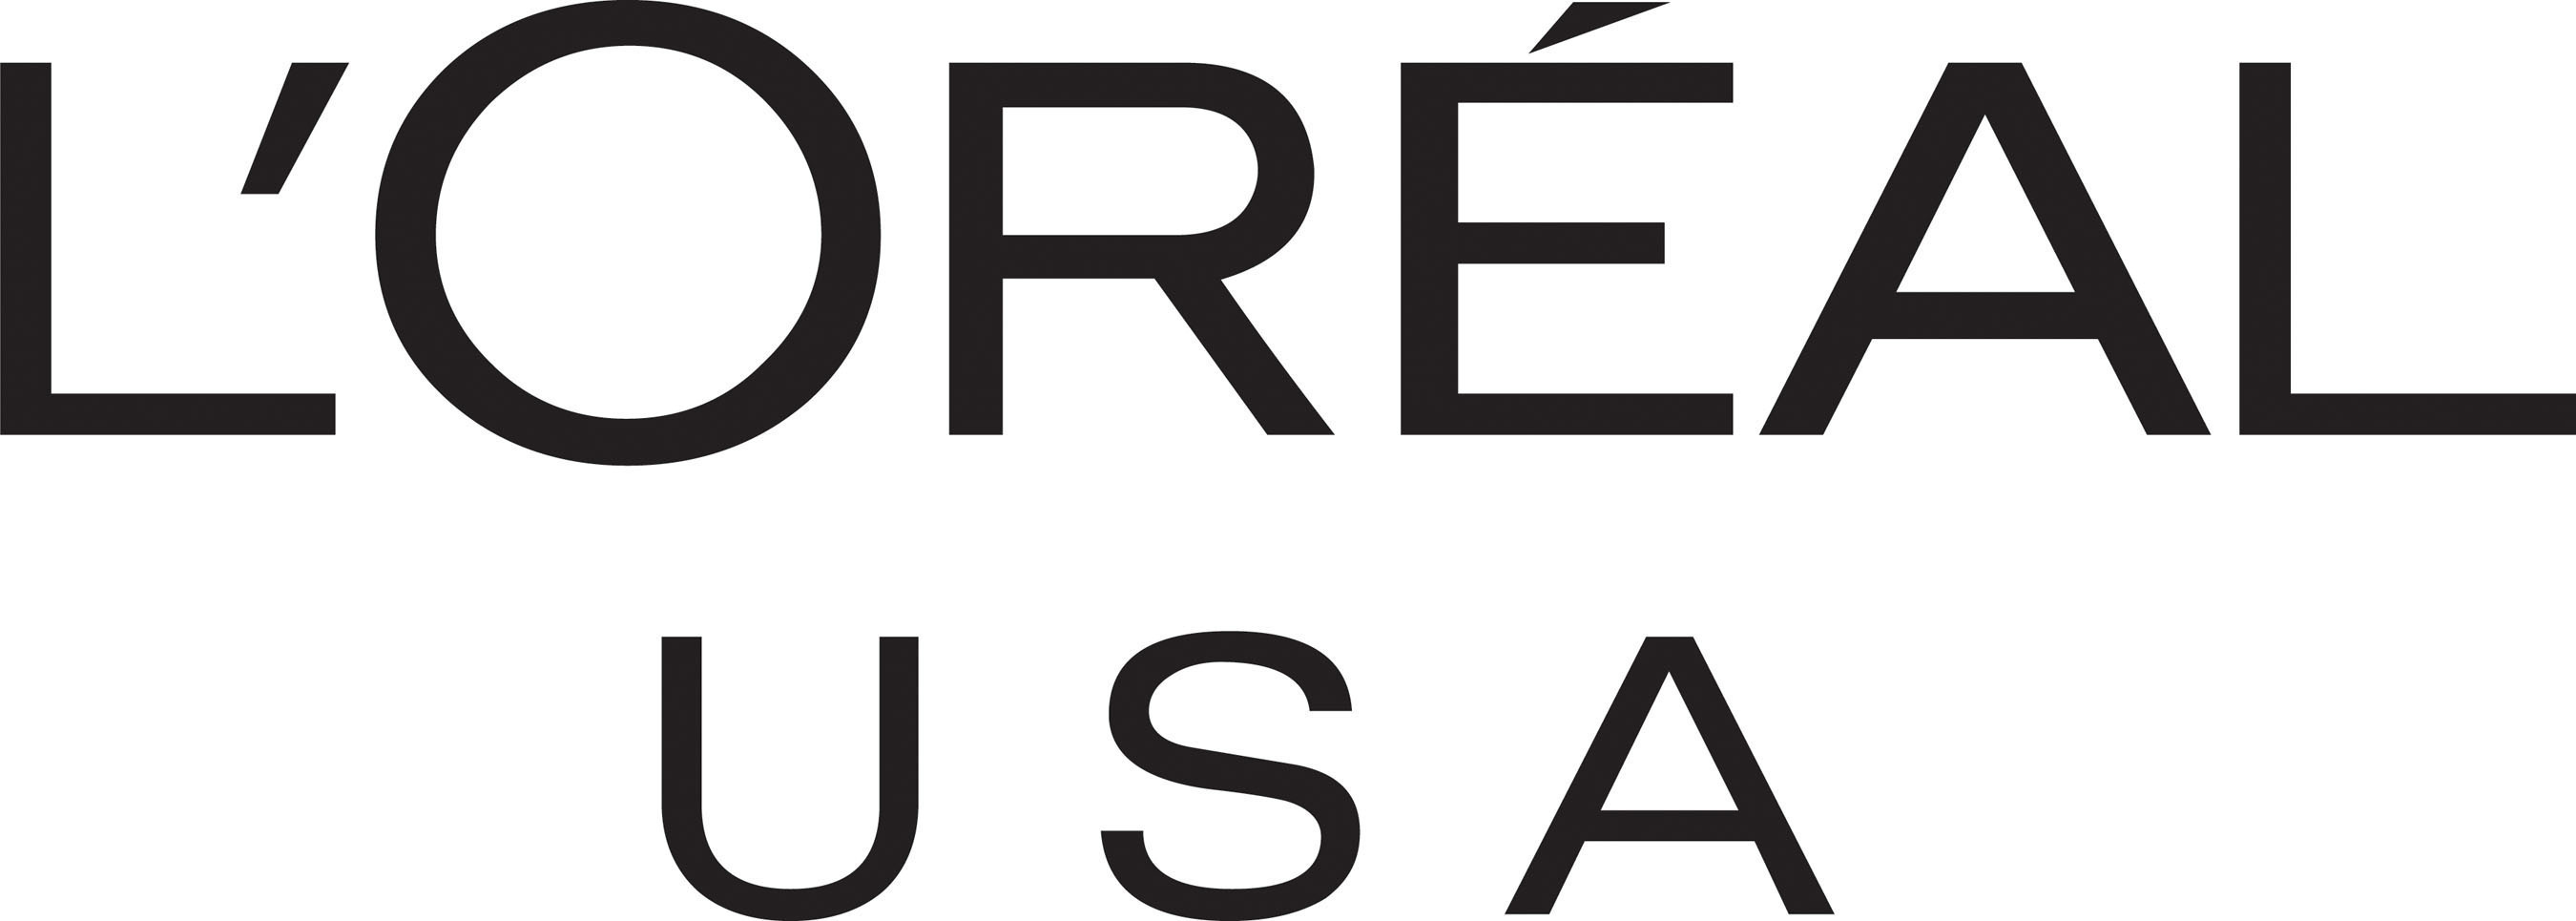 L'Oreal USA Logo.